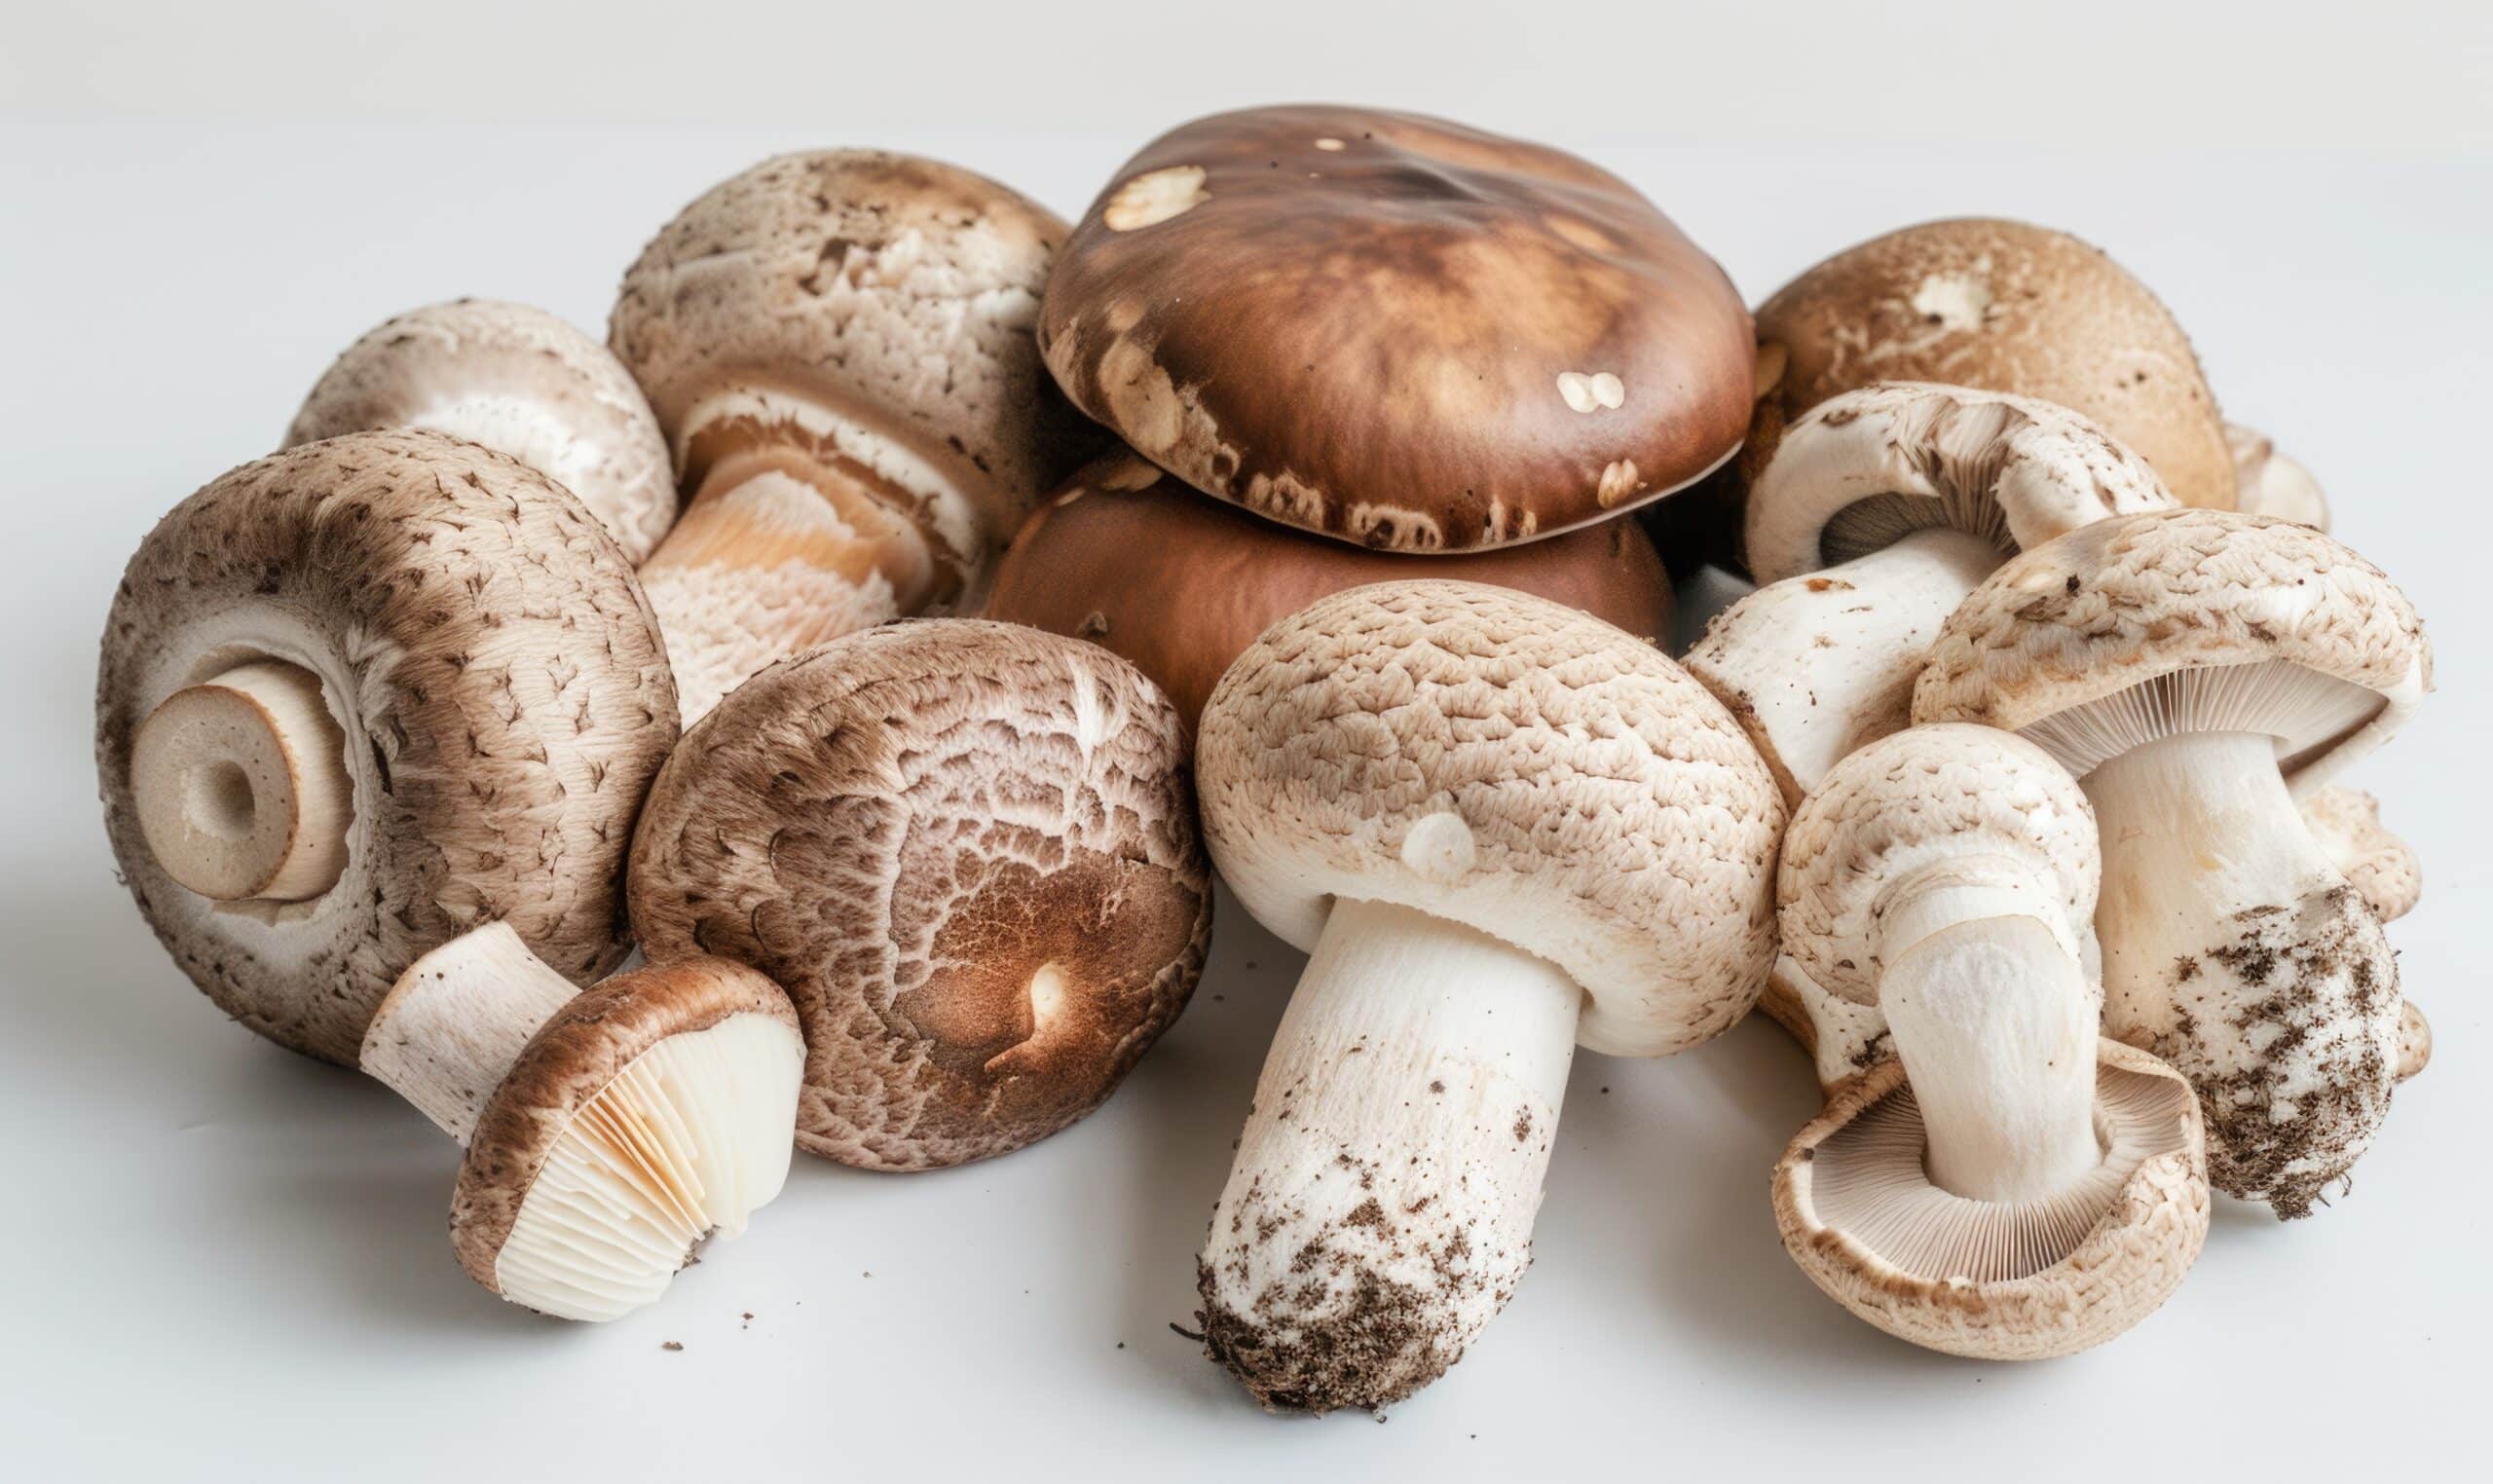 growmyownhealthfood.com : What triggers mushroom growth in garden soil?